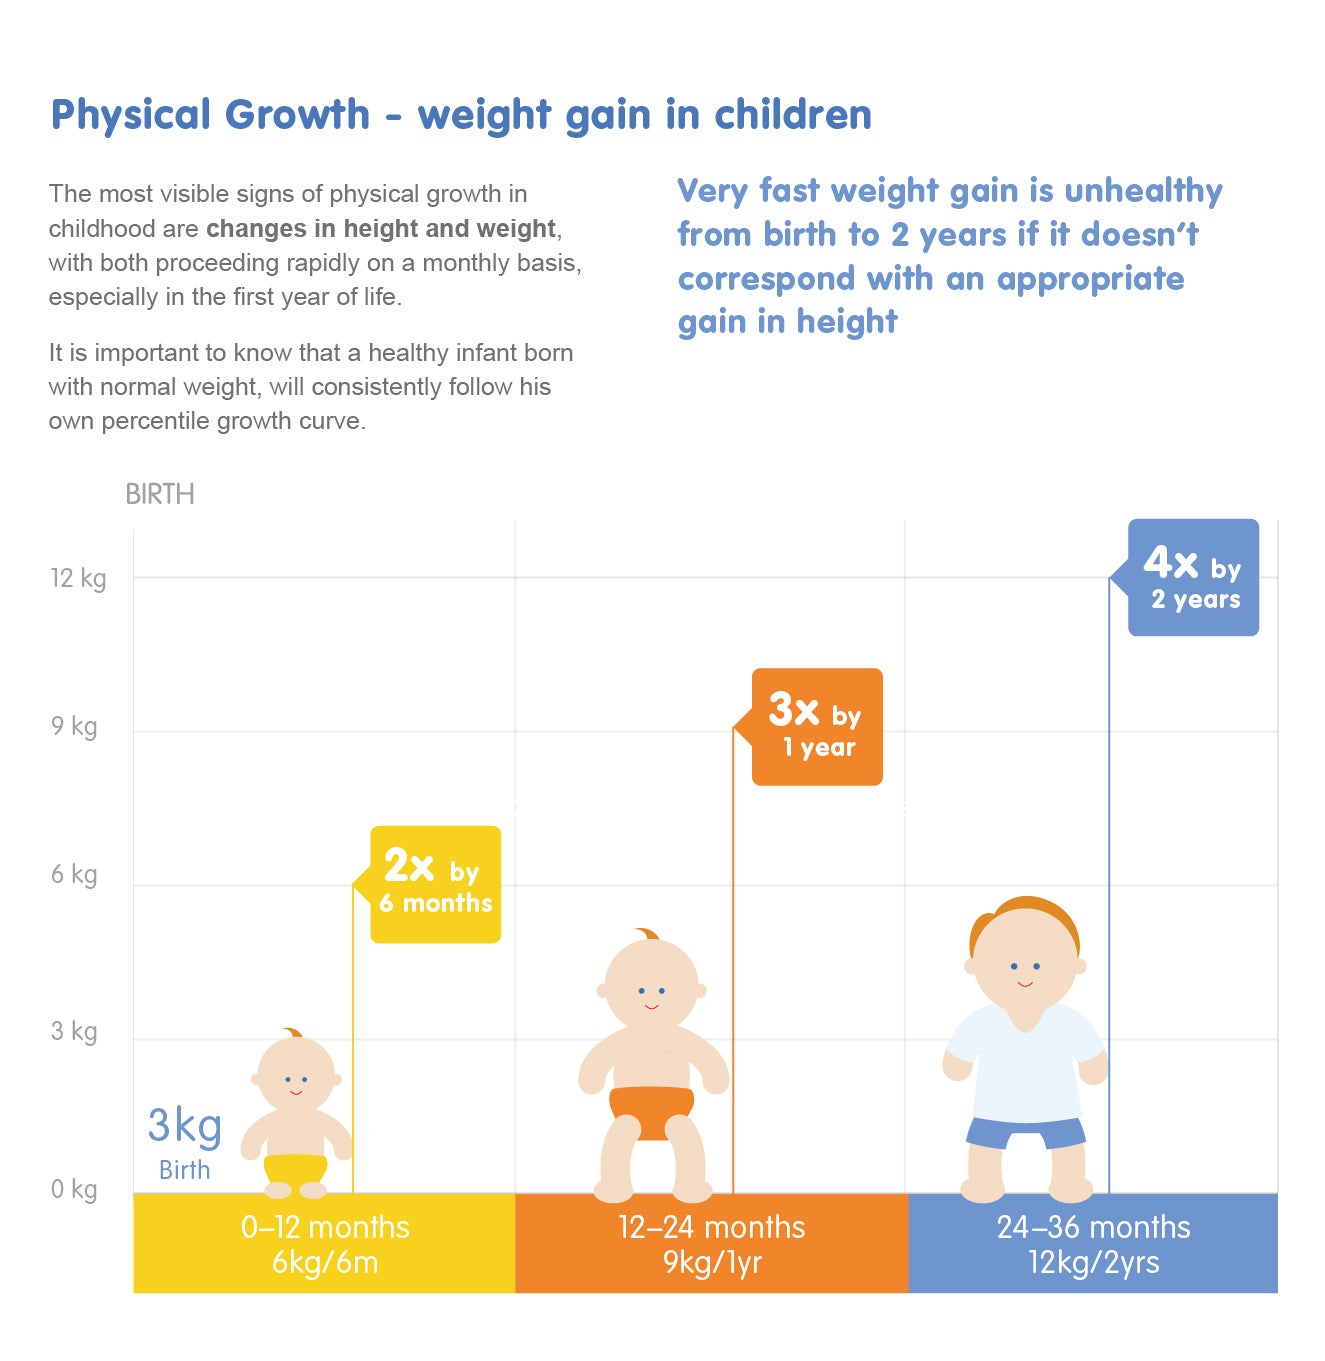 physical growth - weight gain in children